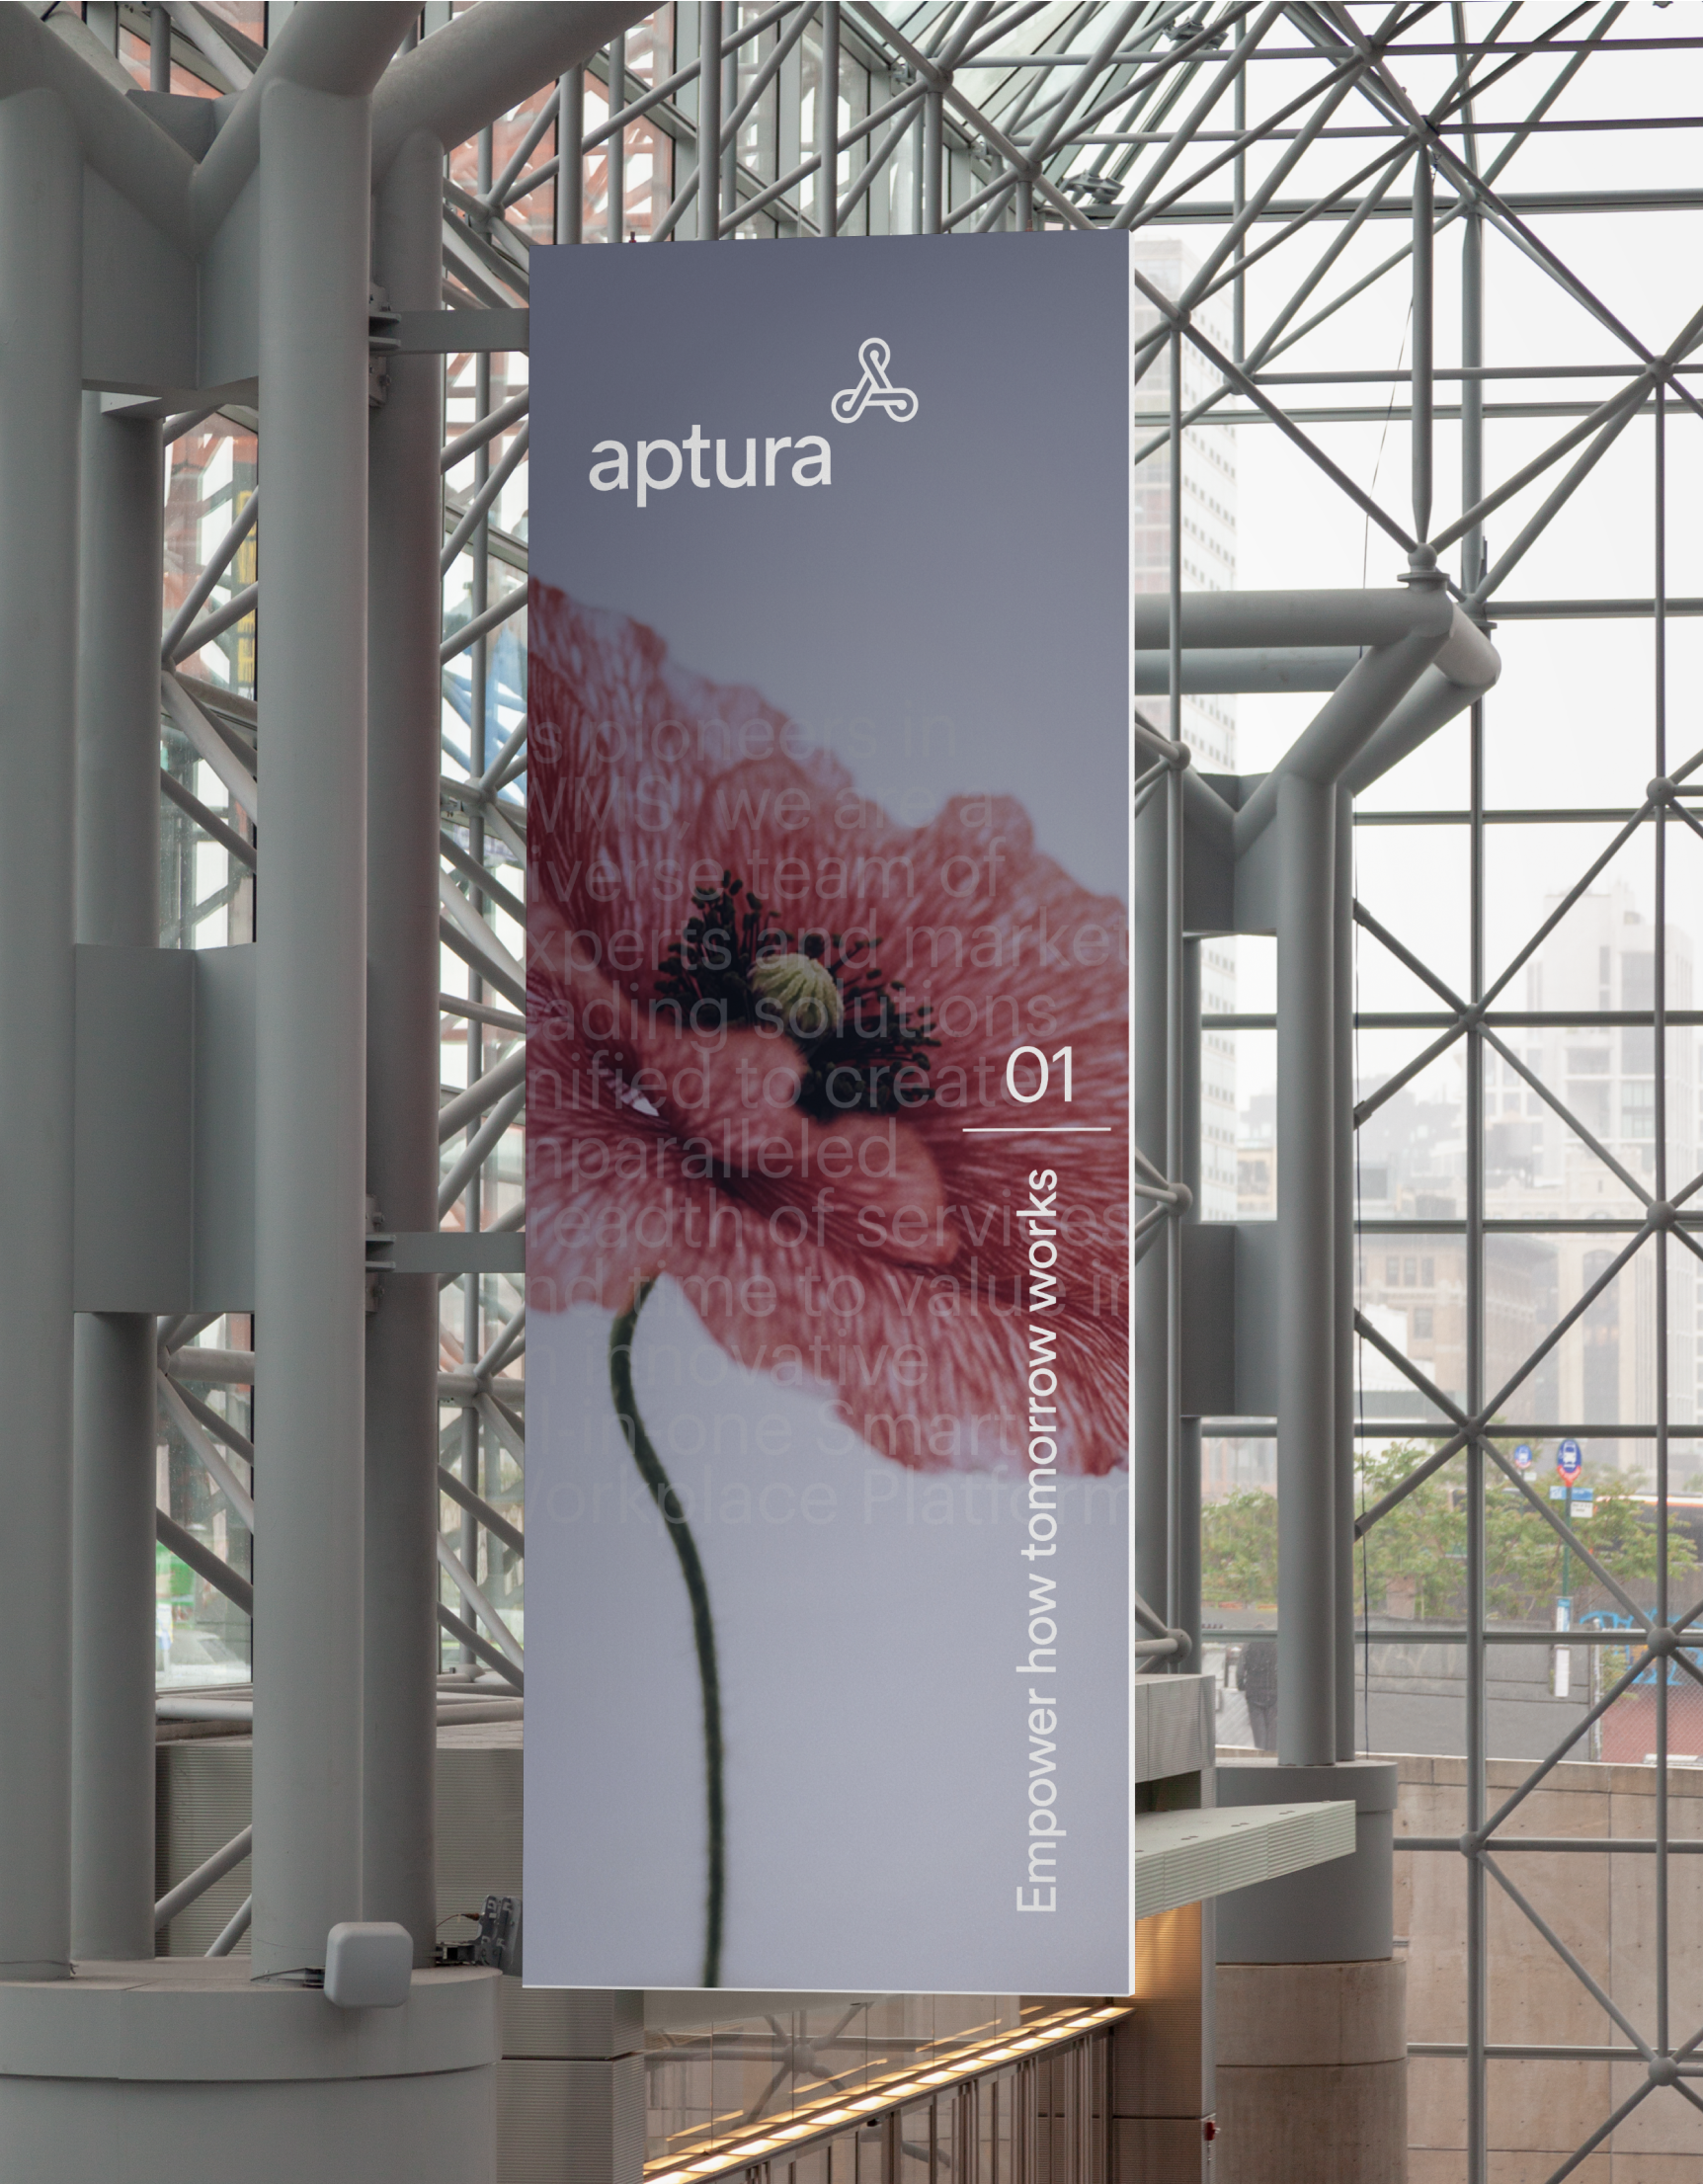 Aptura_Sign-1606-2022-07-30_1-crop